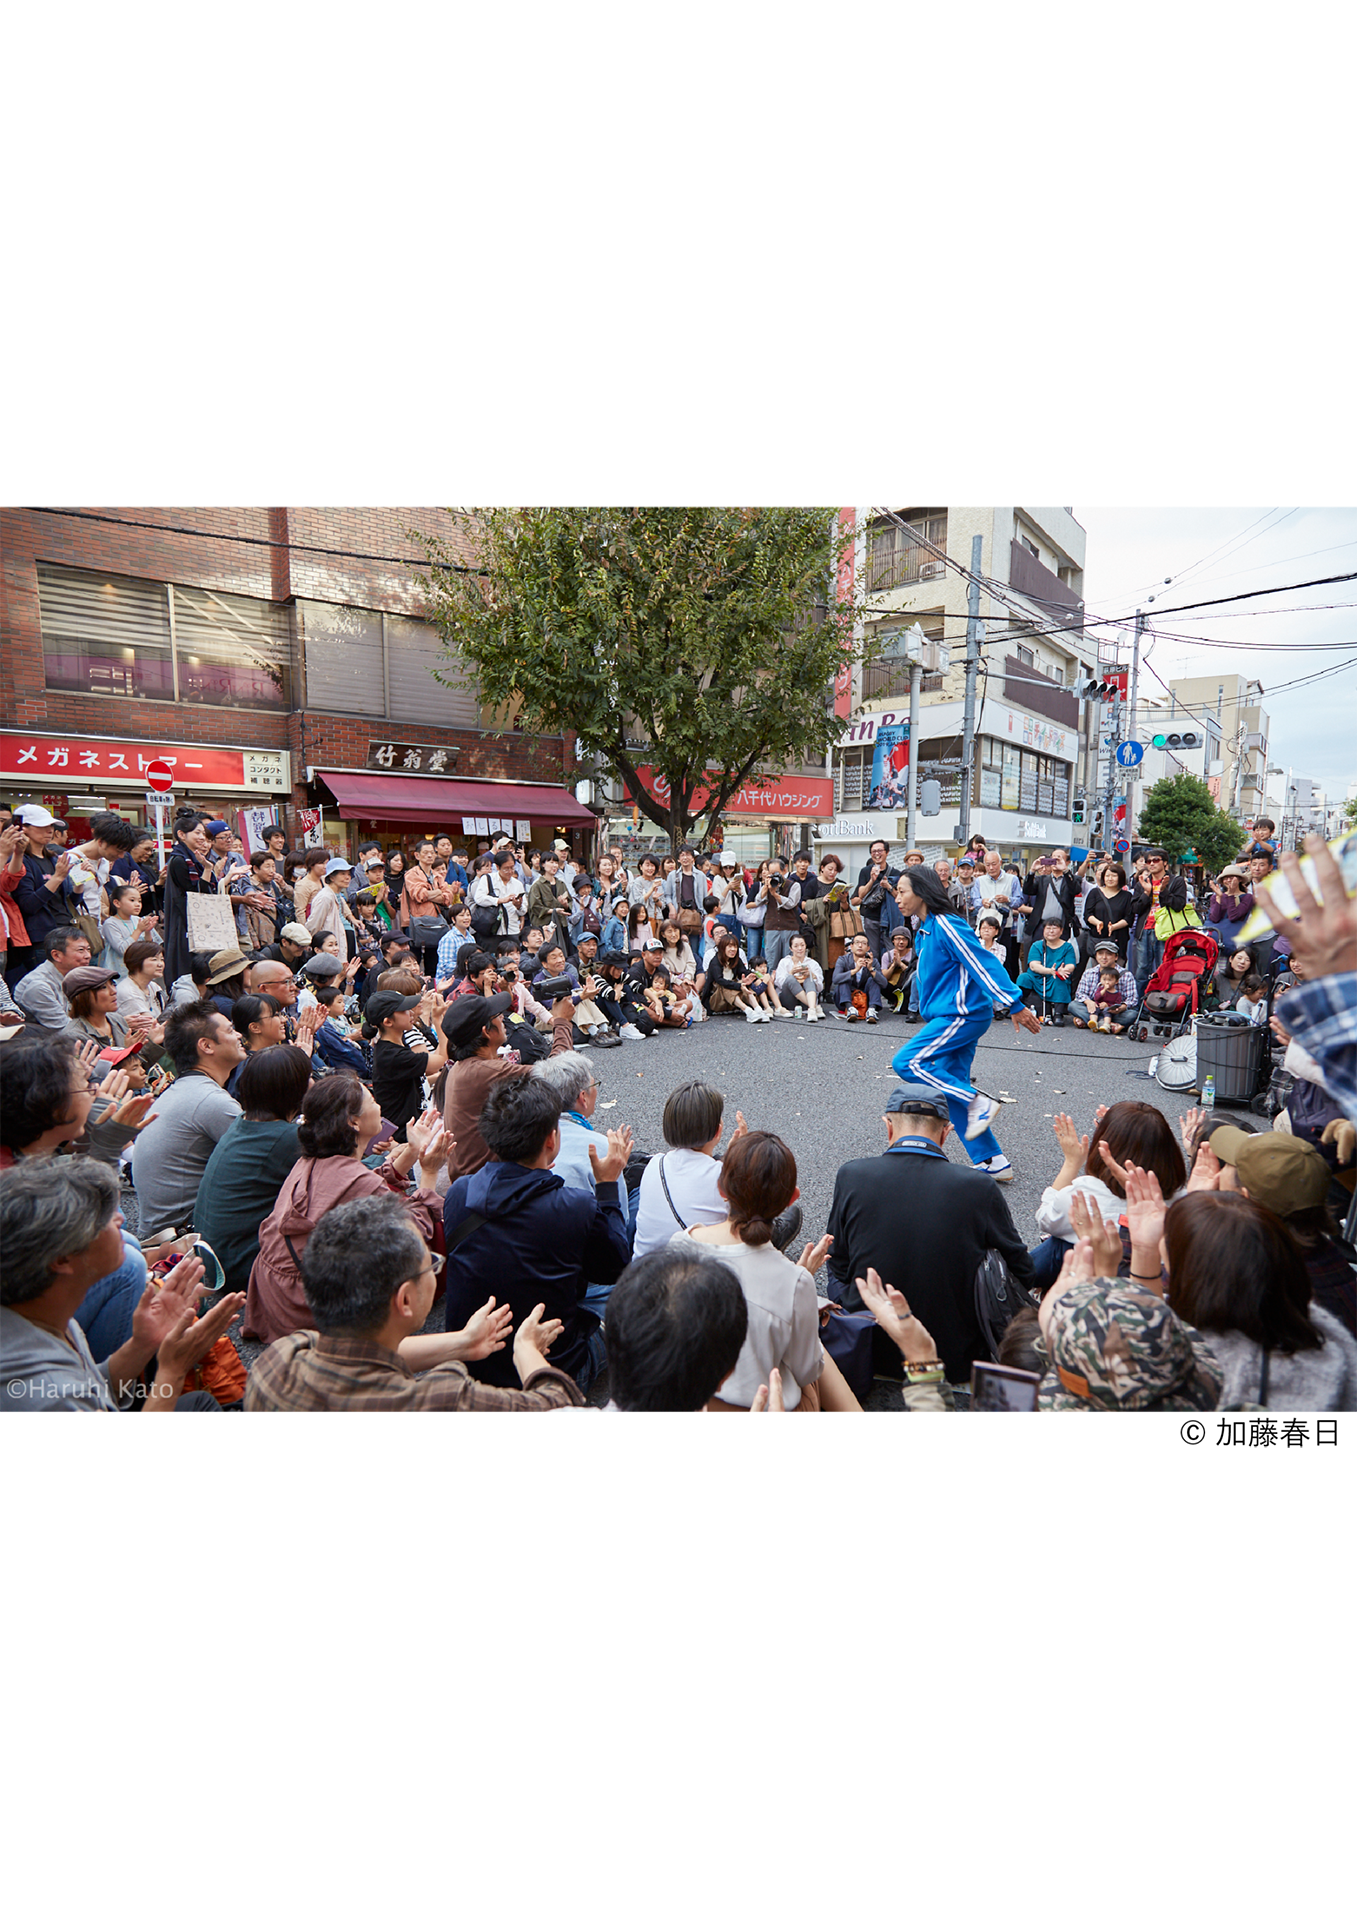 "Sancha de street performance"